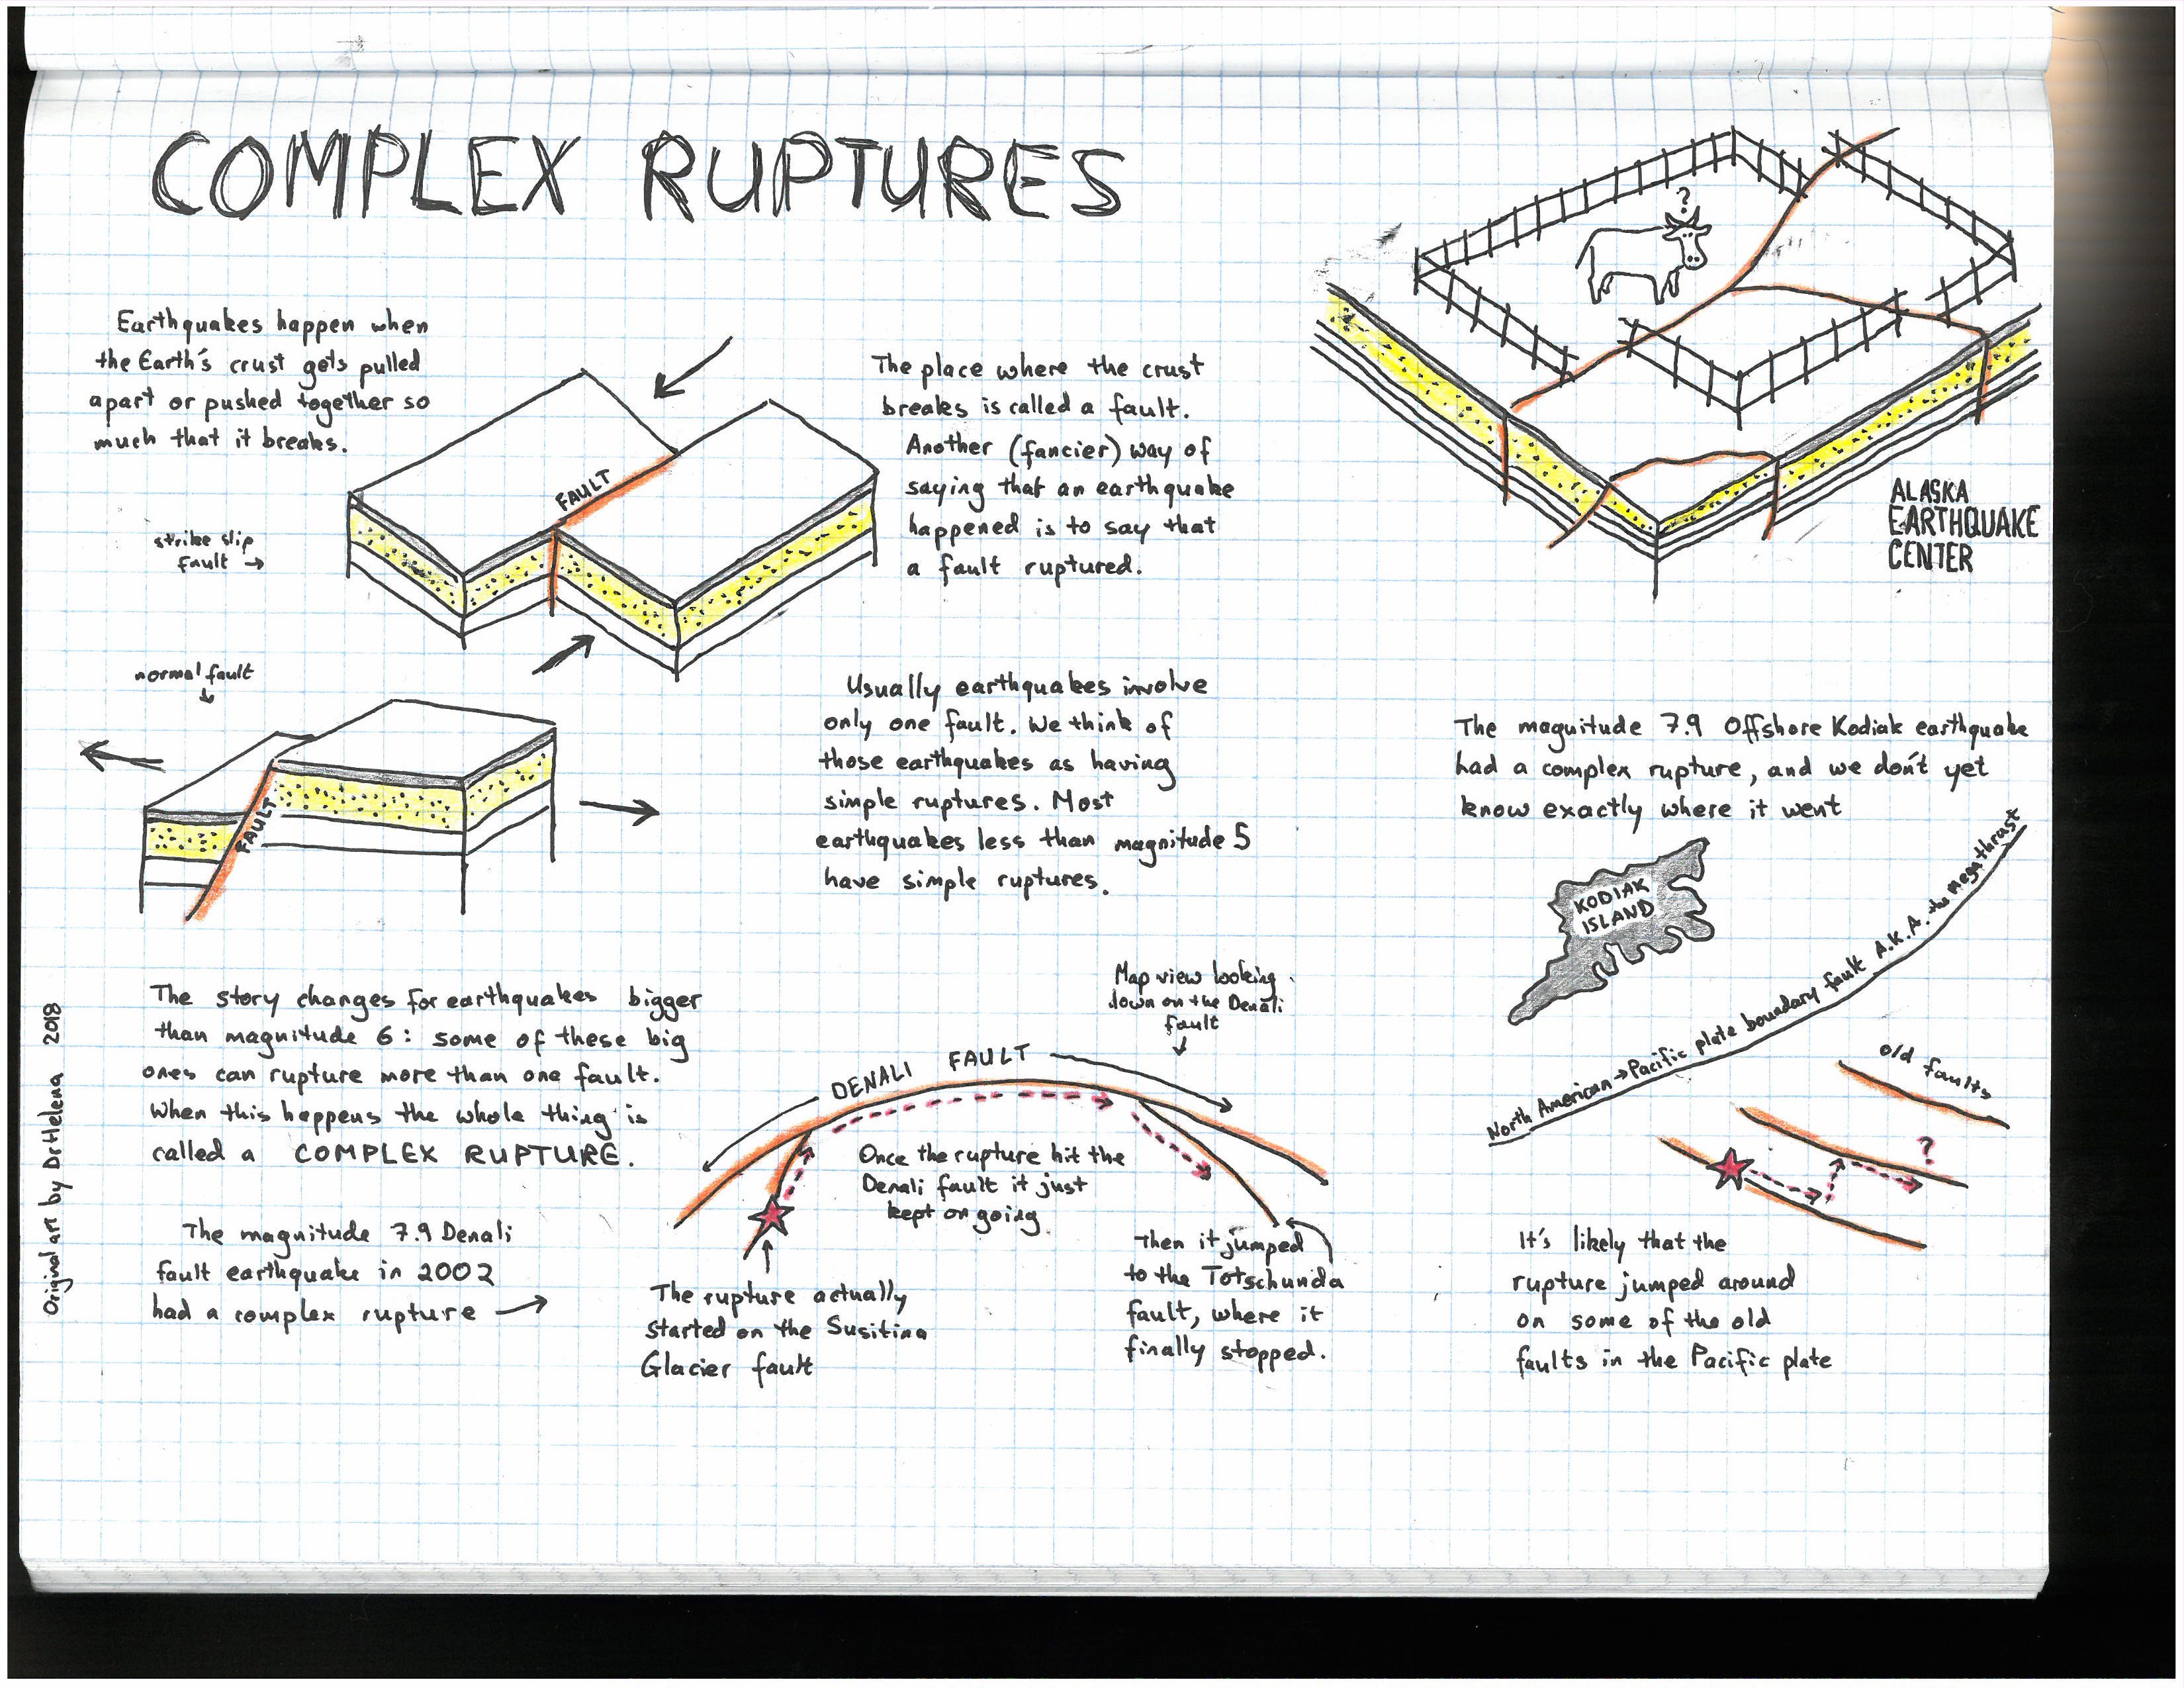 Illustration of complex ruptures.